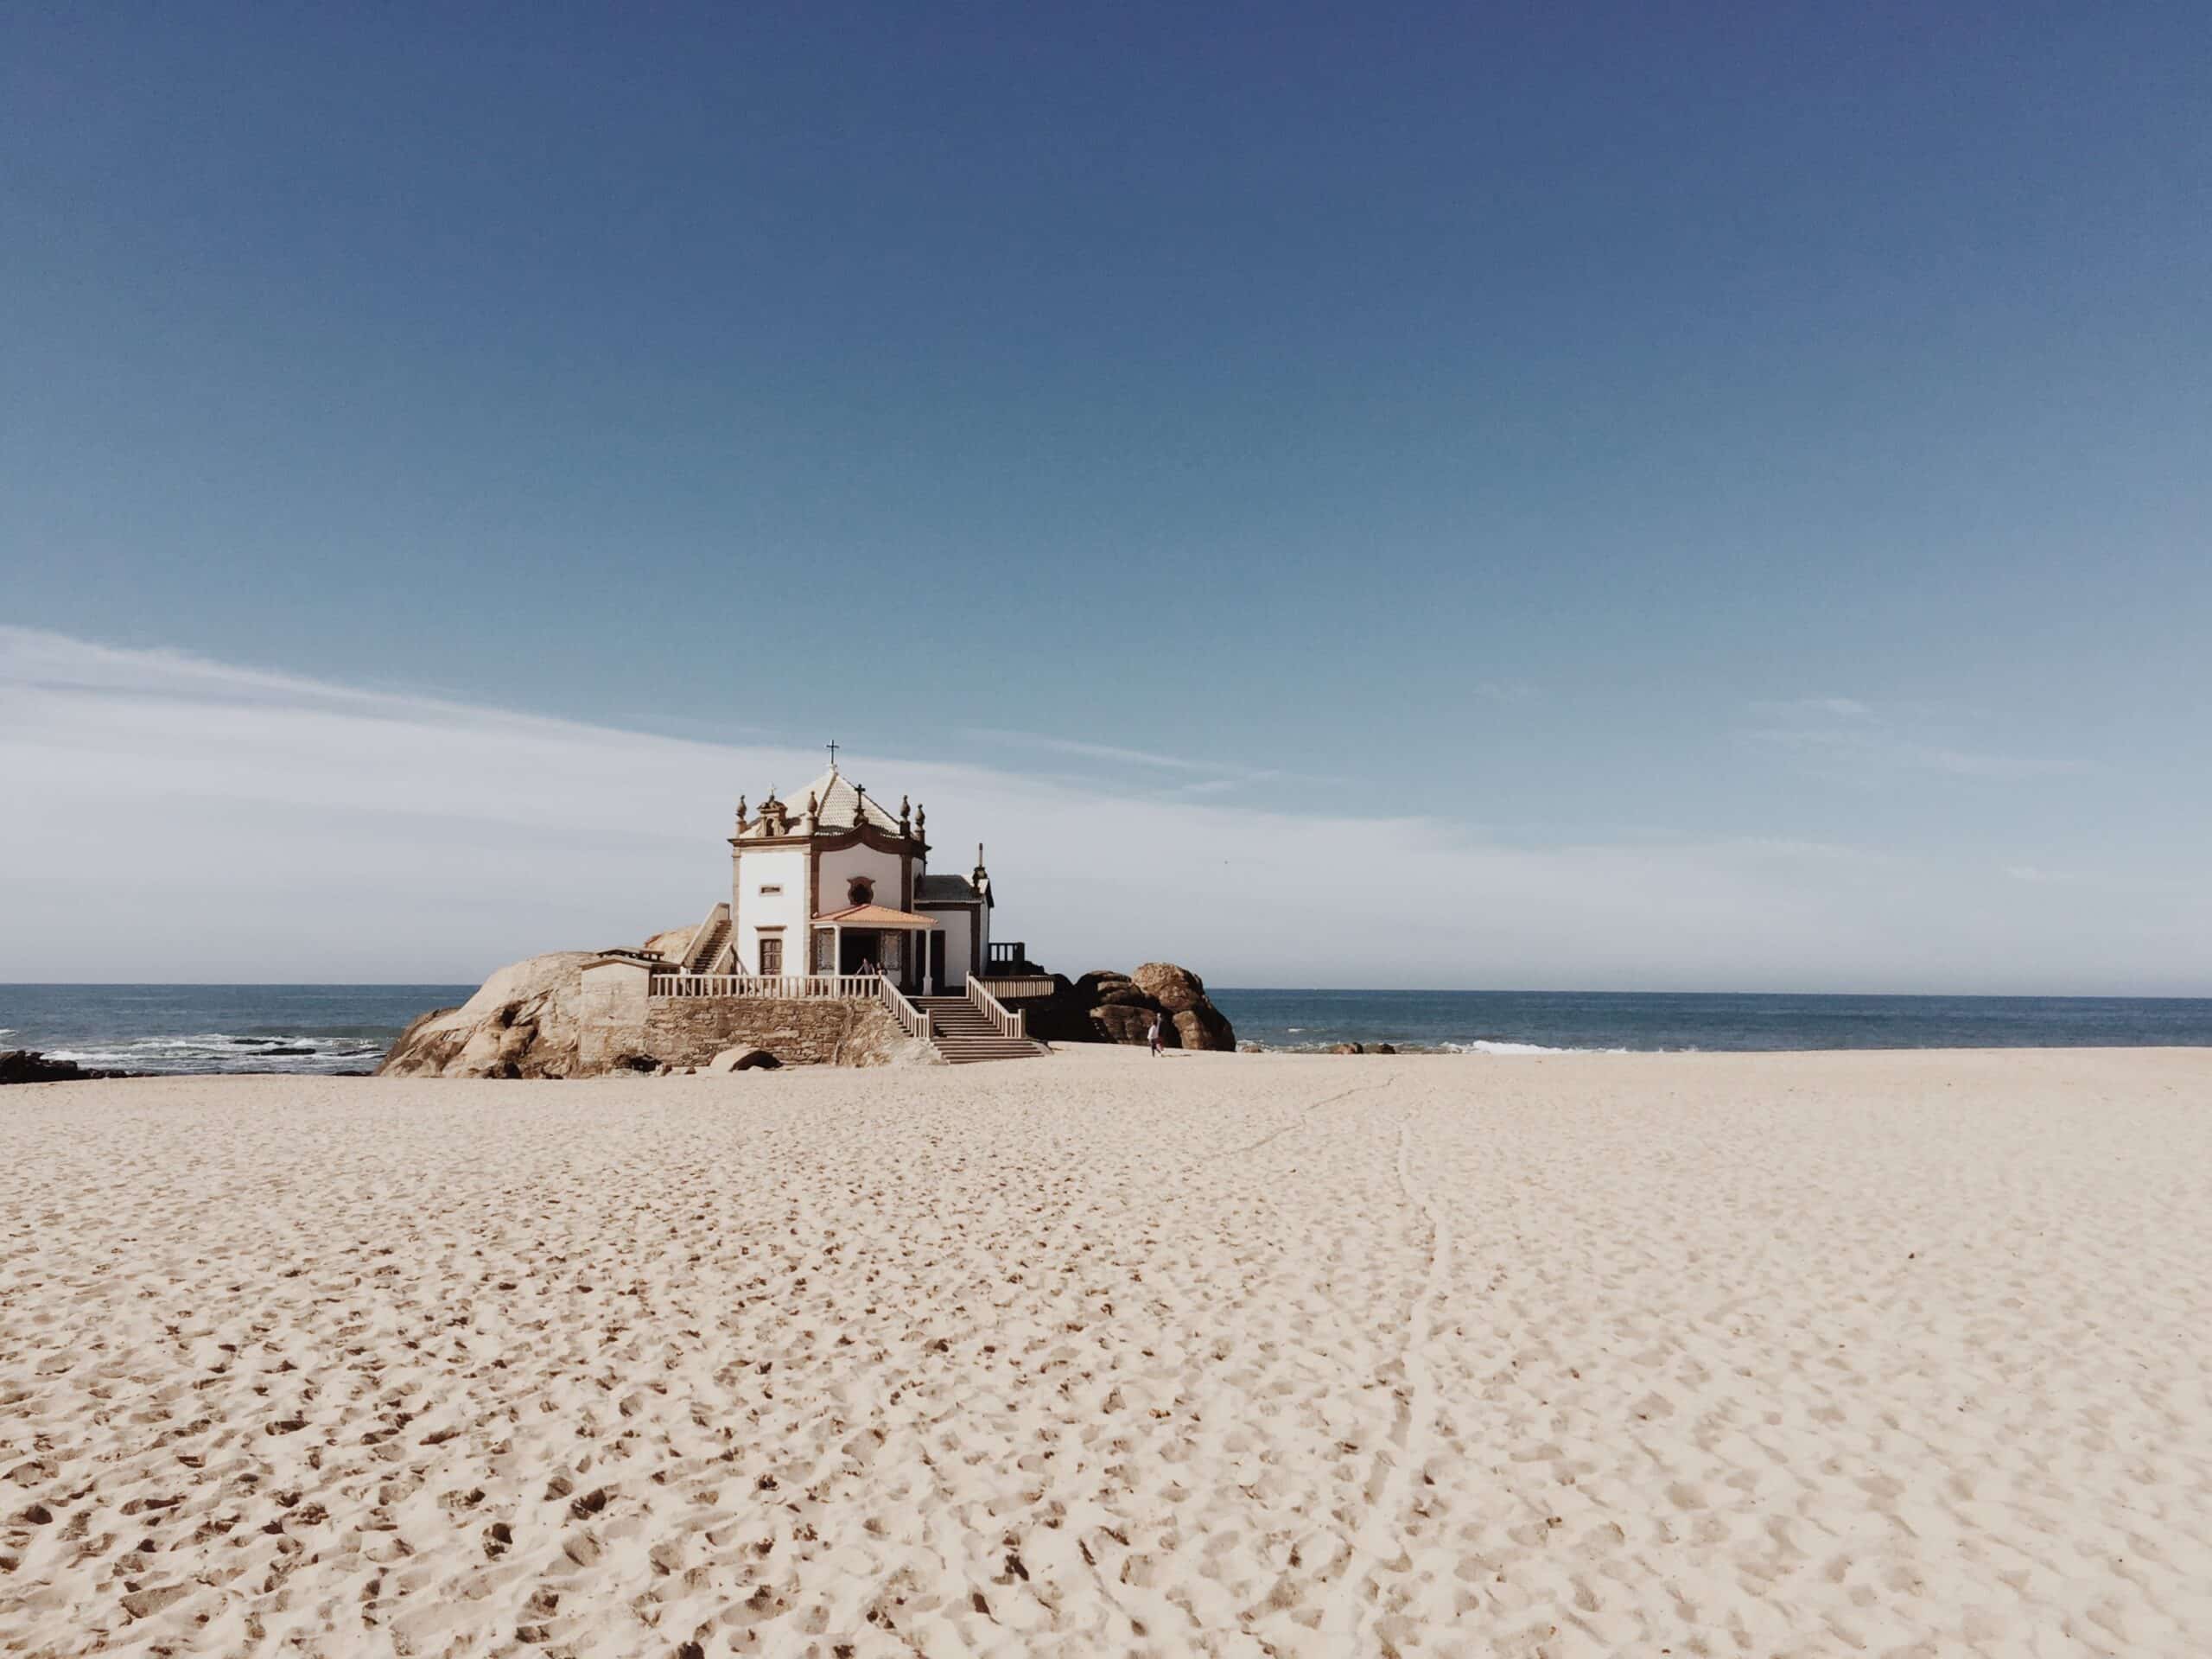 chapel on the beach | Pedro de Sousa via Unsplash